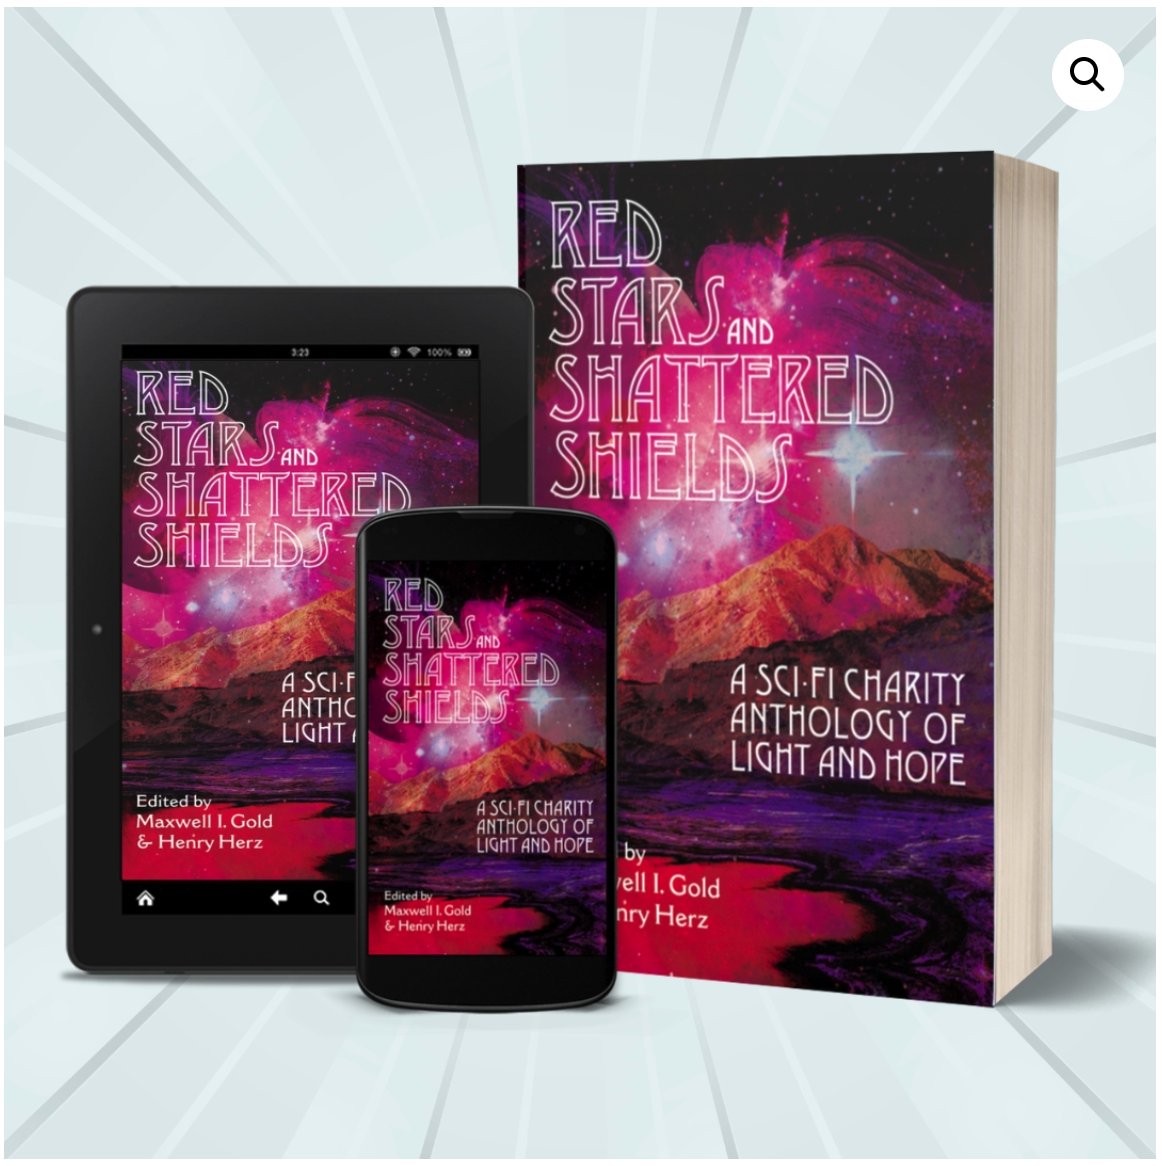 The sci-fi charity anthology, RED STARS & SHATTERED SHIELDS angelaysmith.com/product-catego… has stories from Robert Silverberg, @JonathanMaberry, @LeahCypess, @adamtroycastro, @DavidBrin, @jenniferbrozek, @Catrambo, @JenniferBrody, David Gerrold, @JodyLynnNye, Keith DeCandido